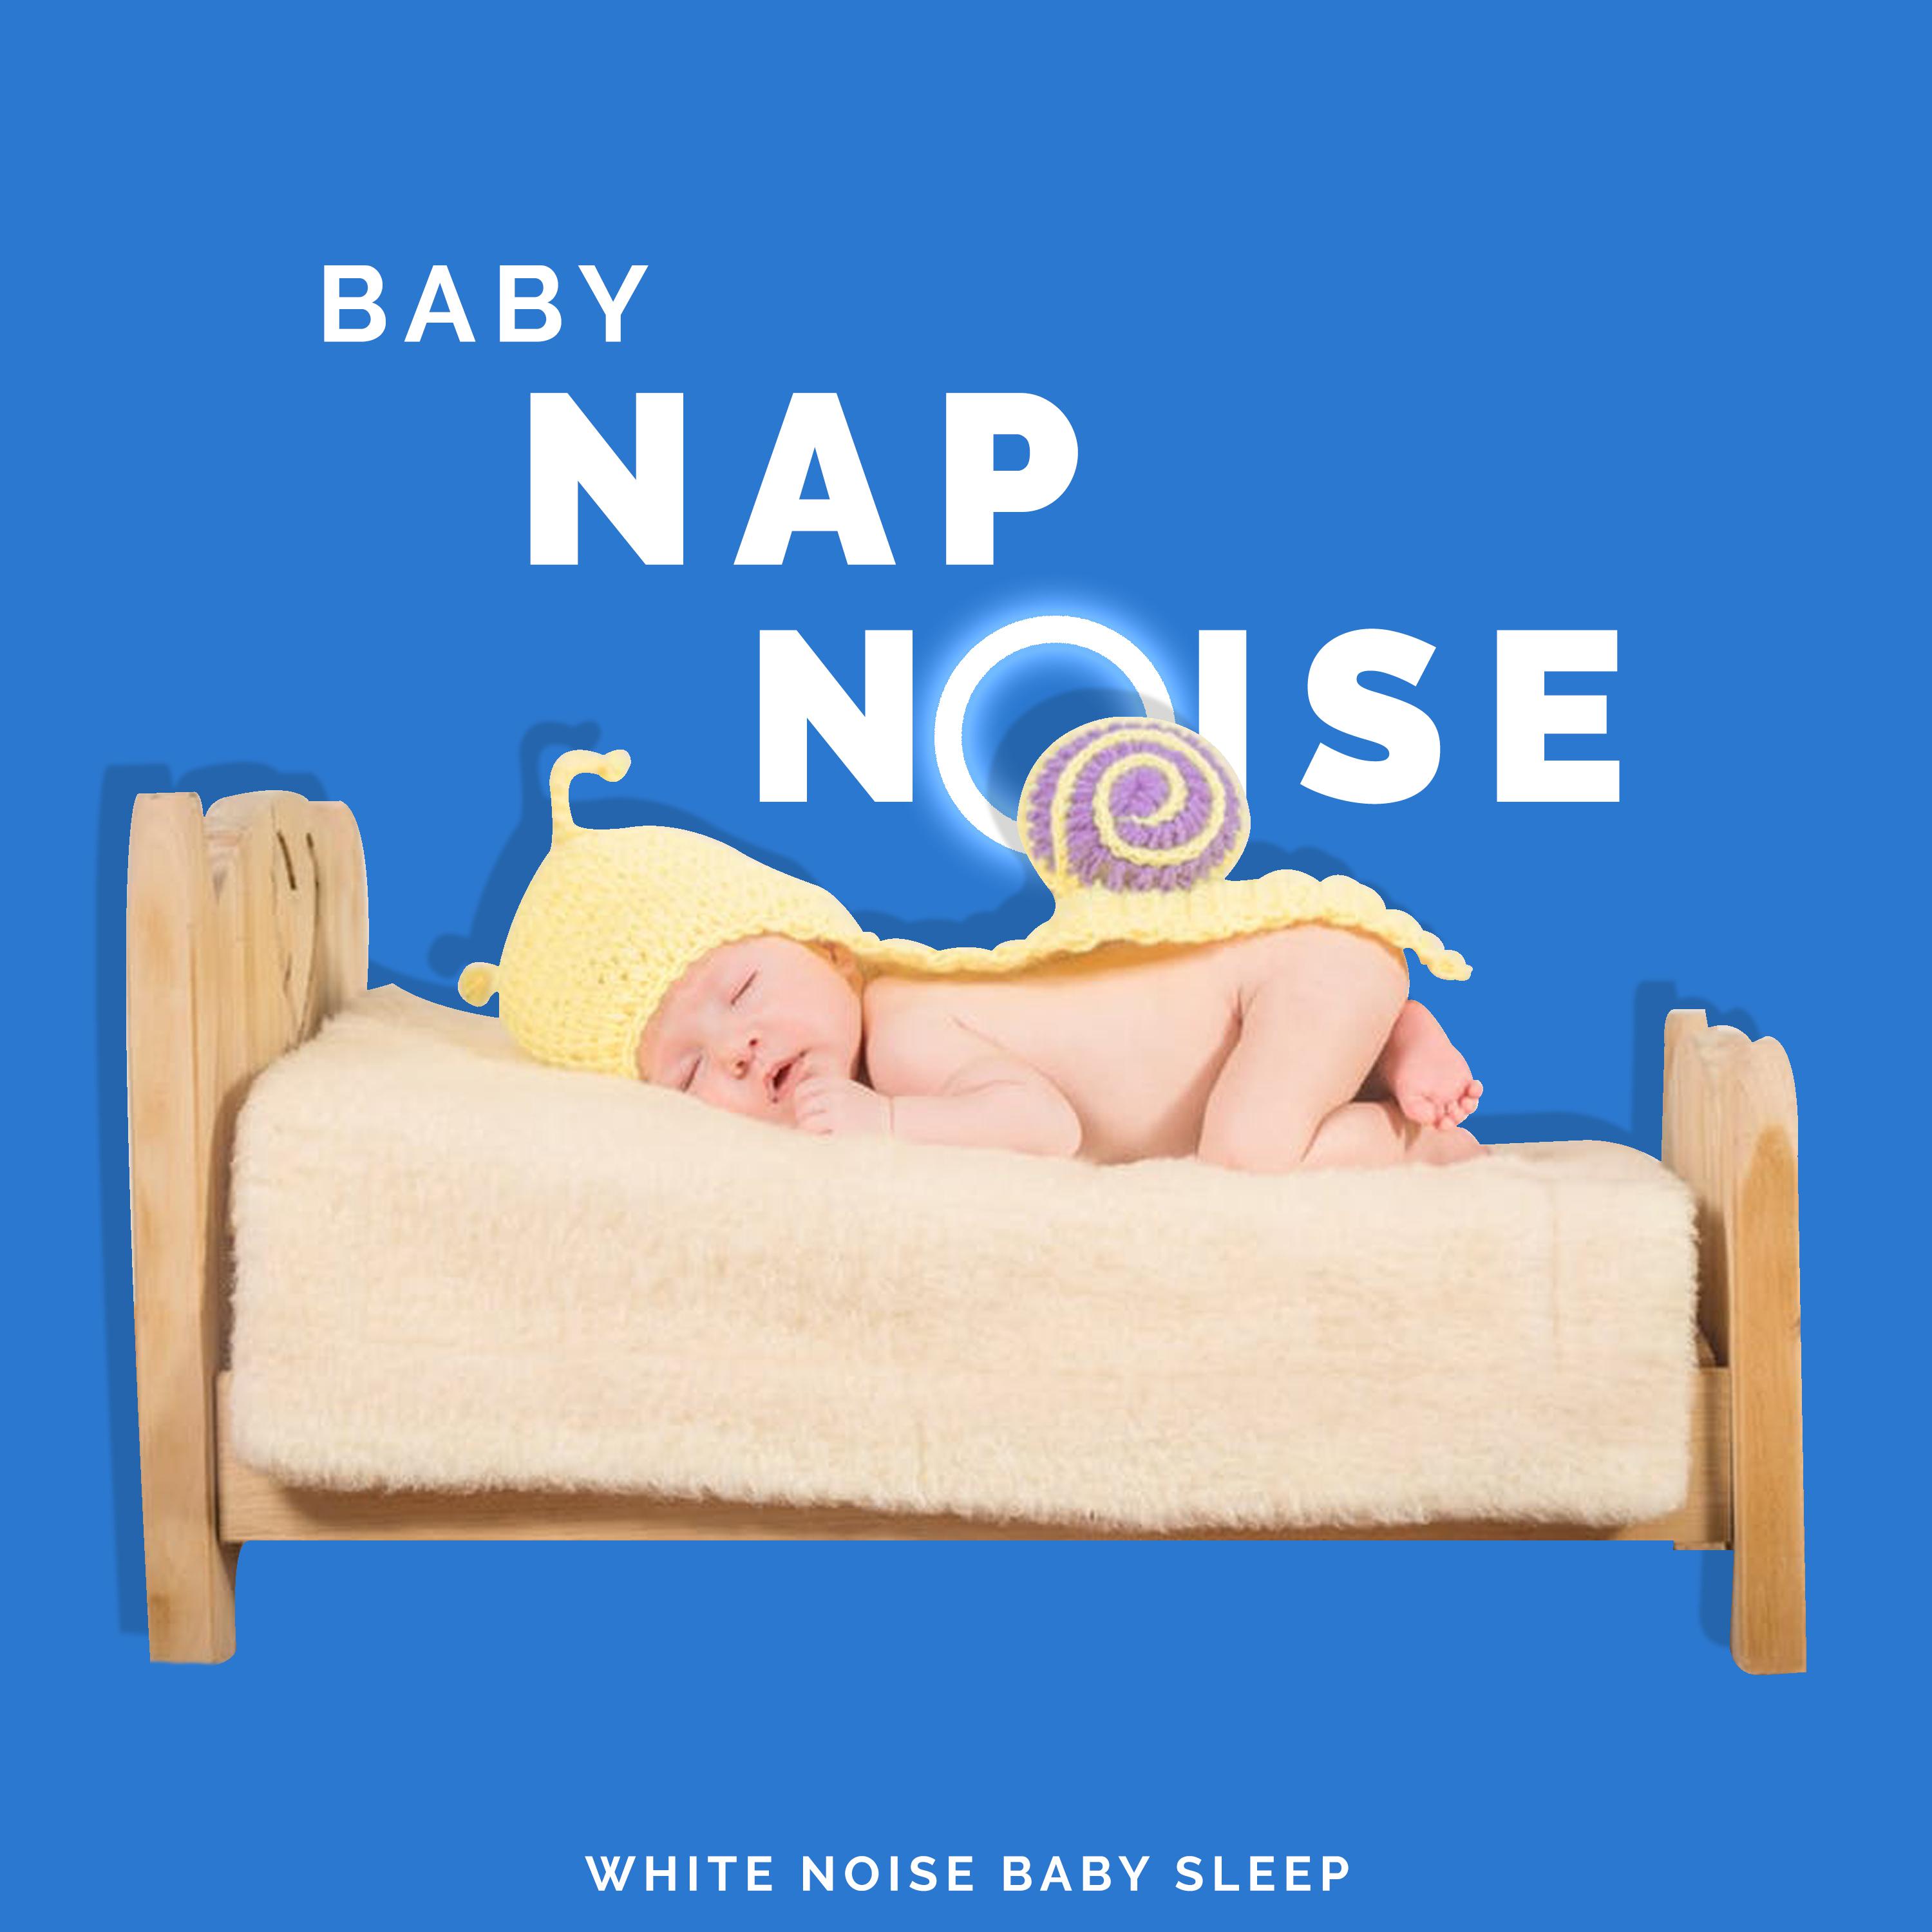 Baby Nap Noise